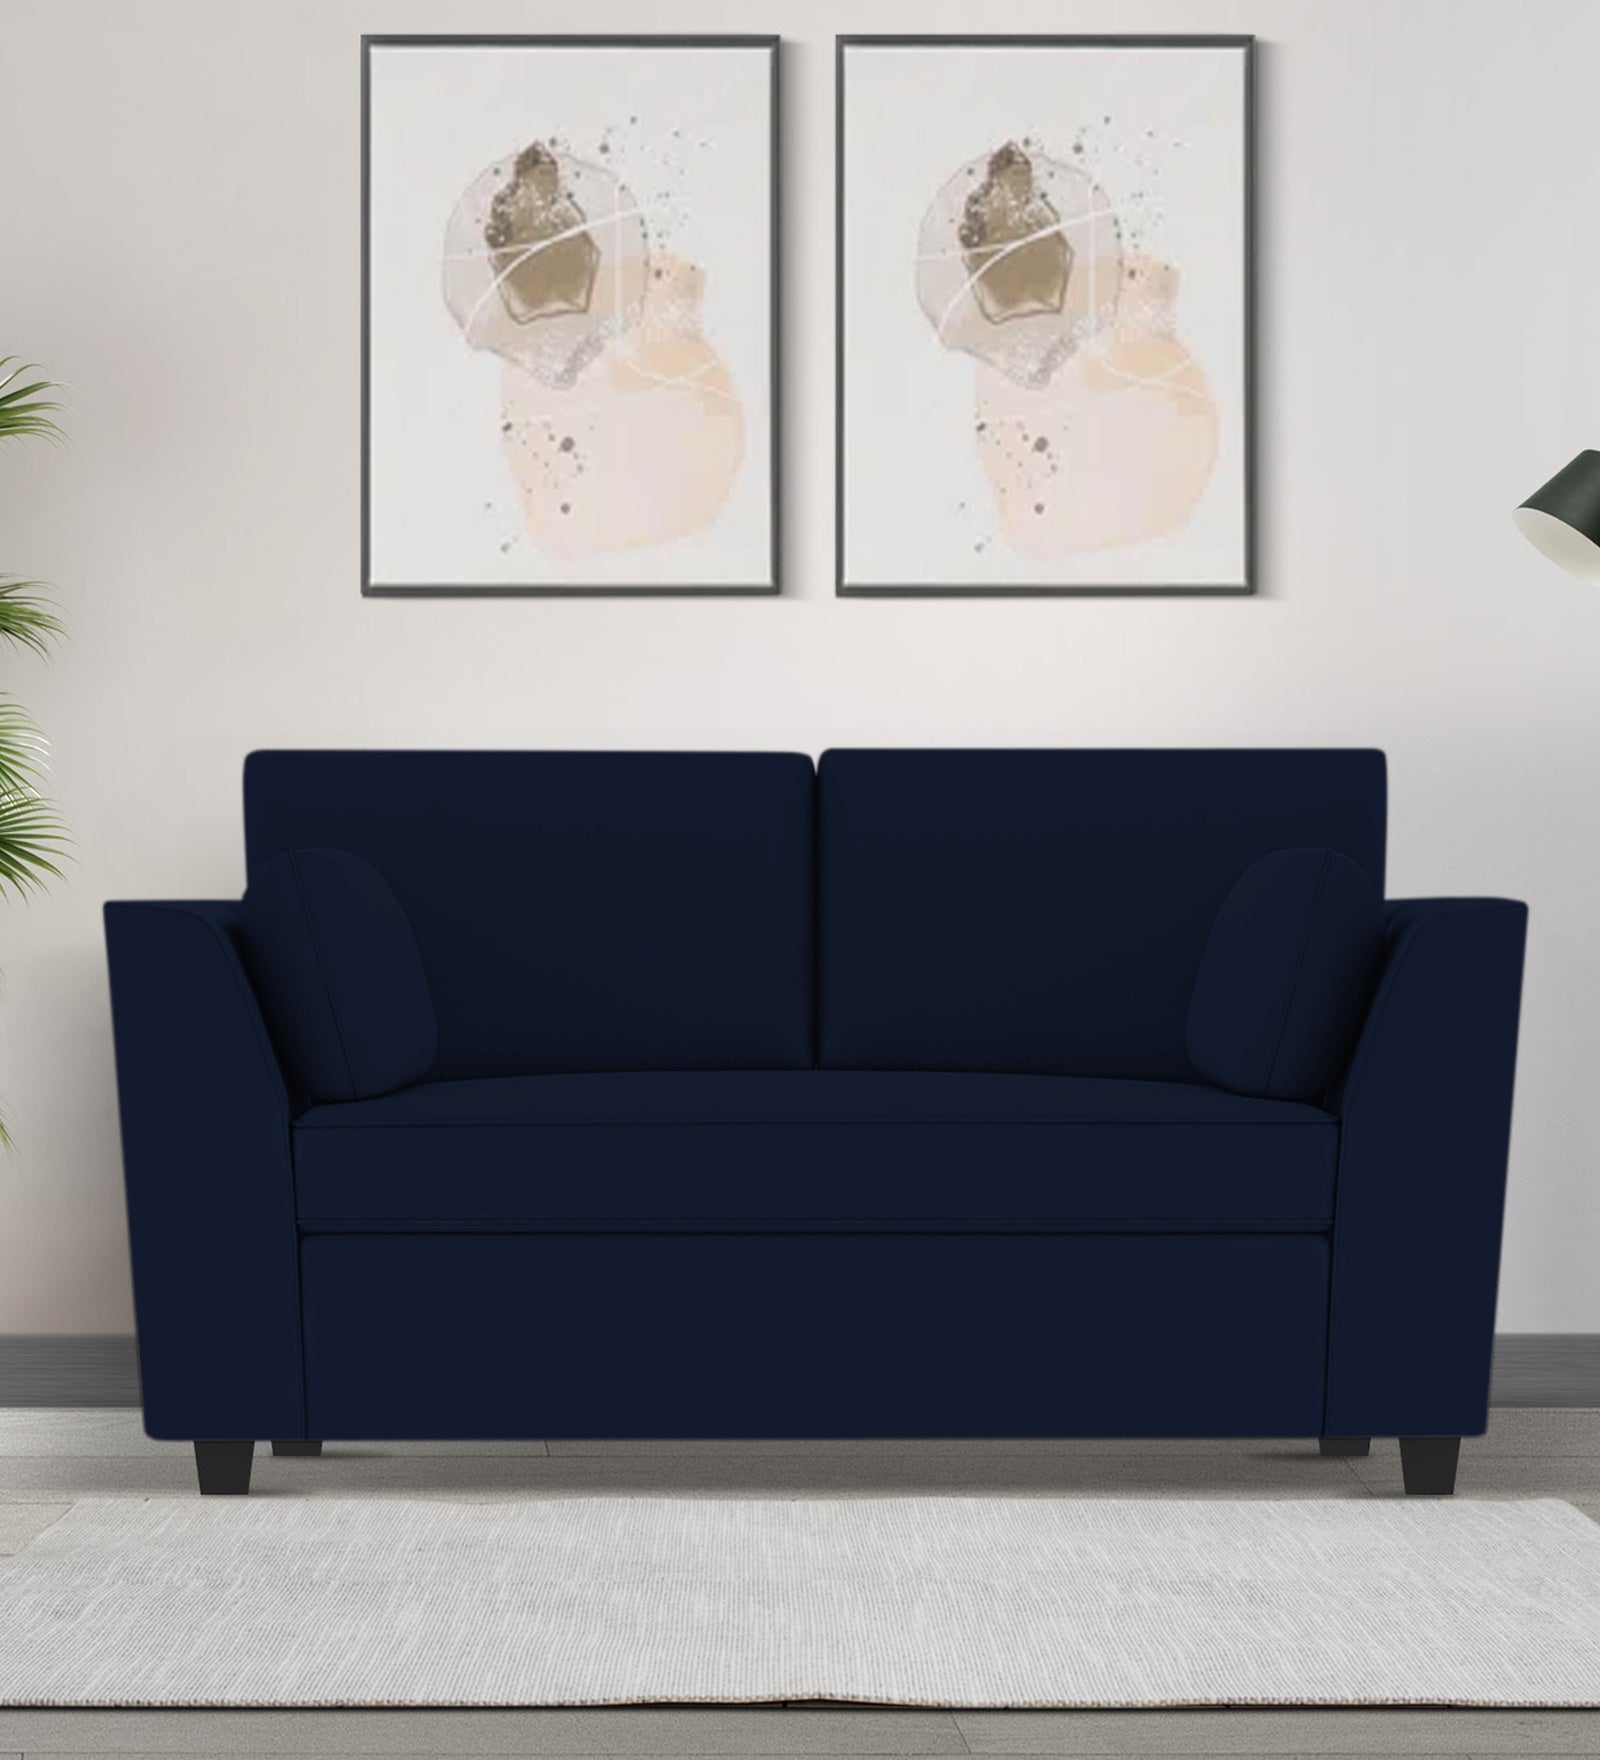 Bristo Velvet 2 Seater Sofa in Indigo Blue Colour With Storage